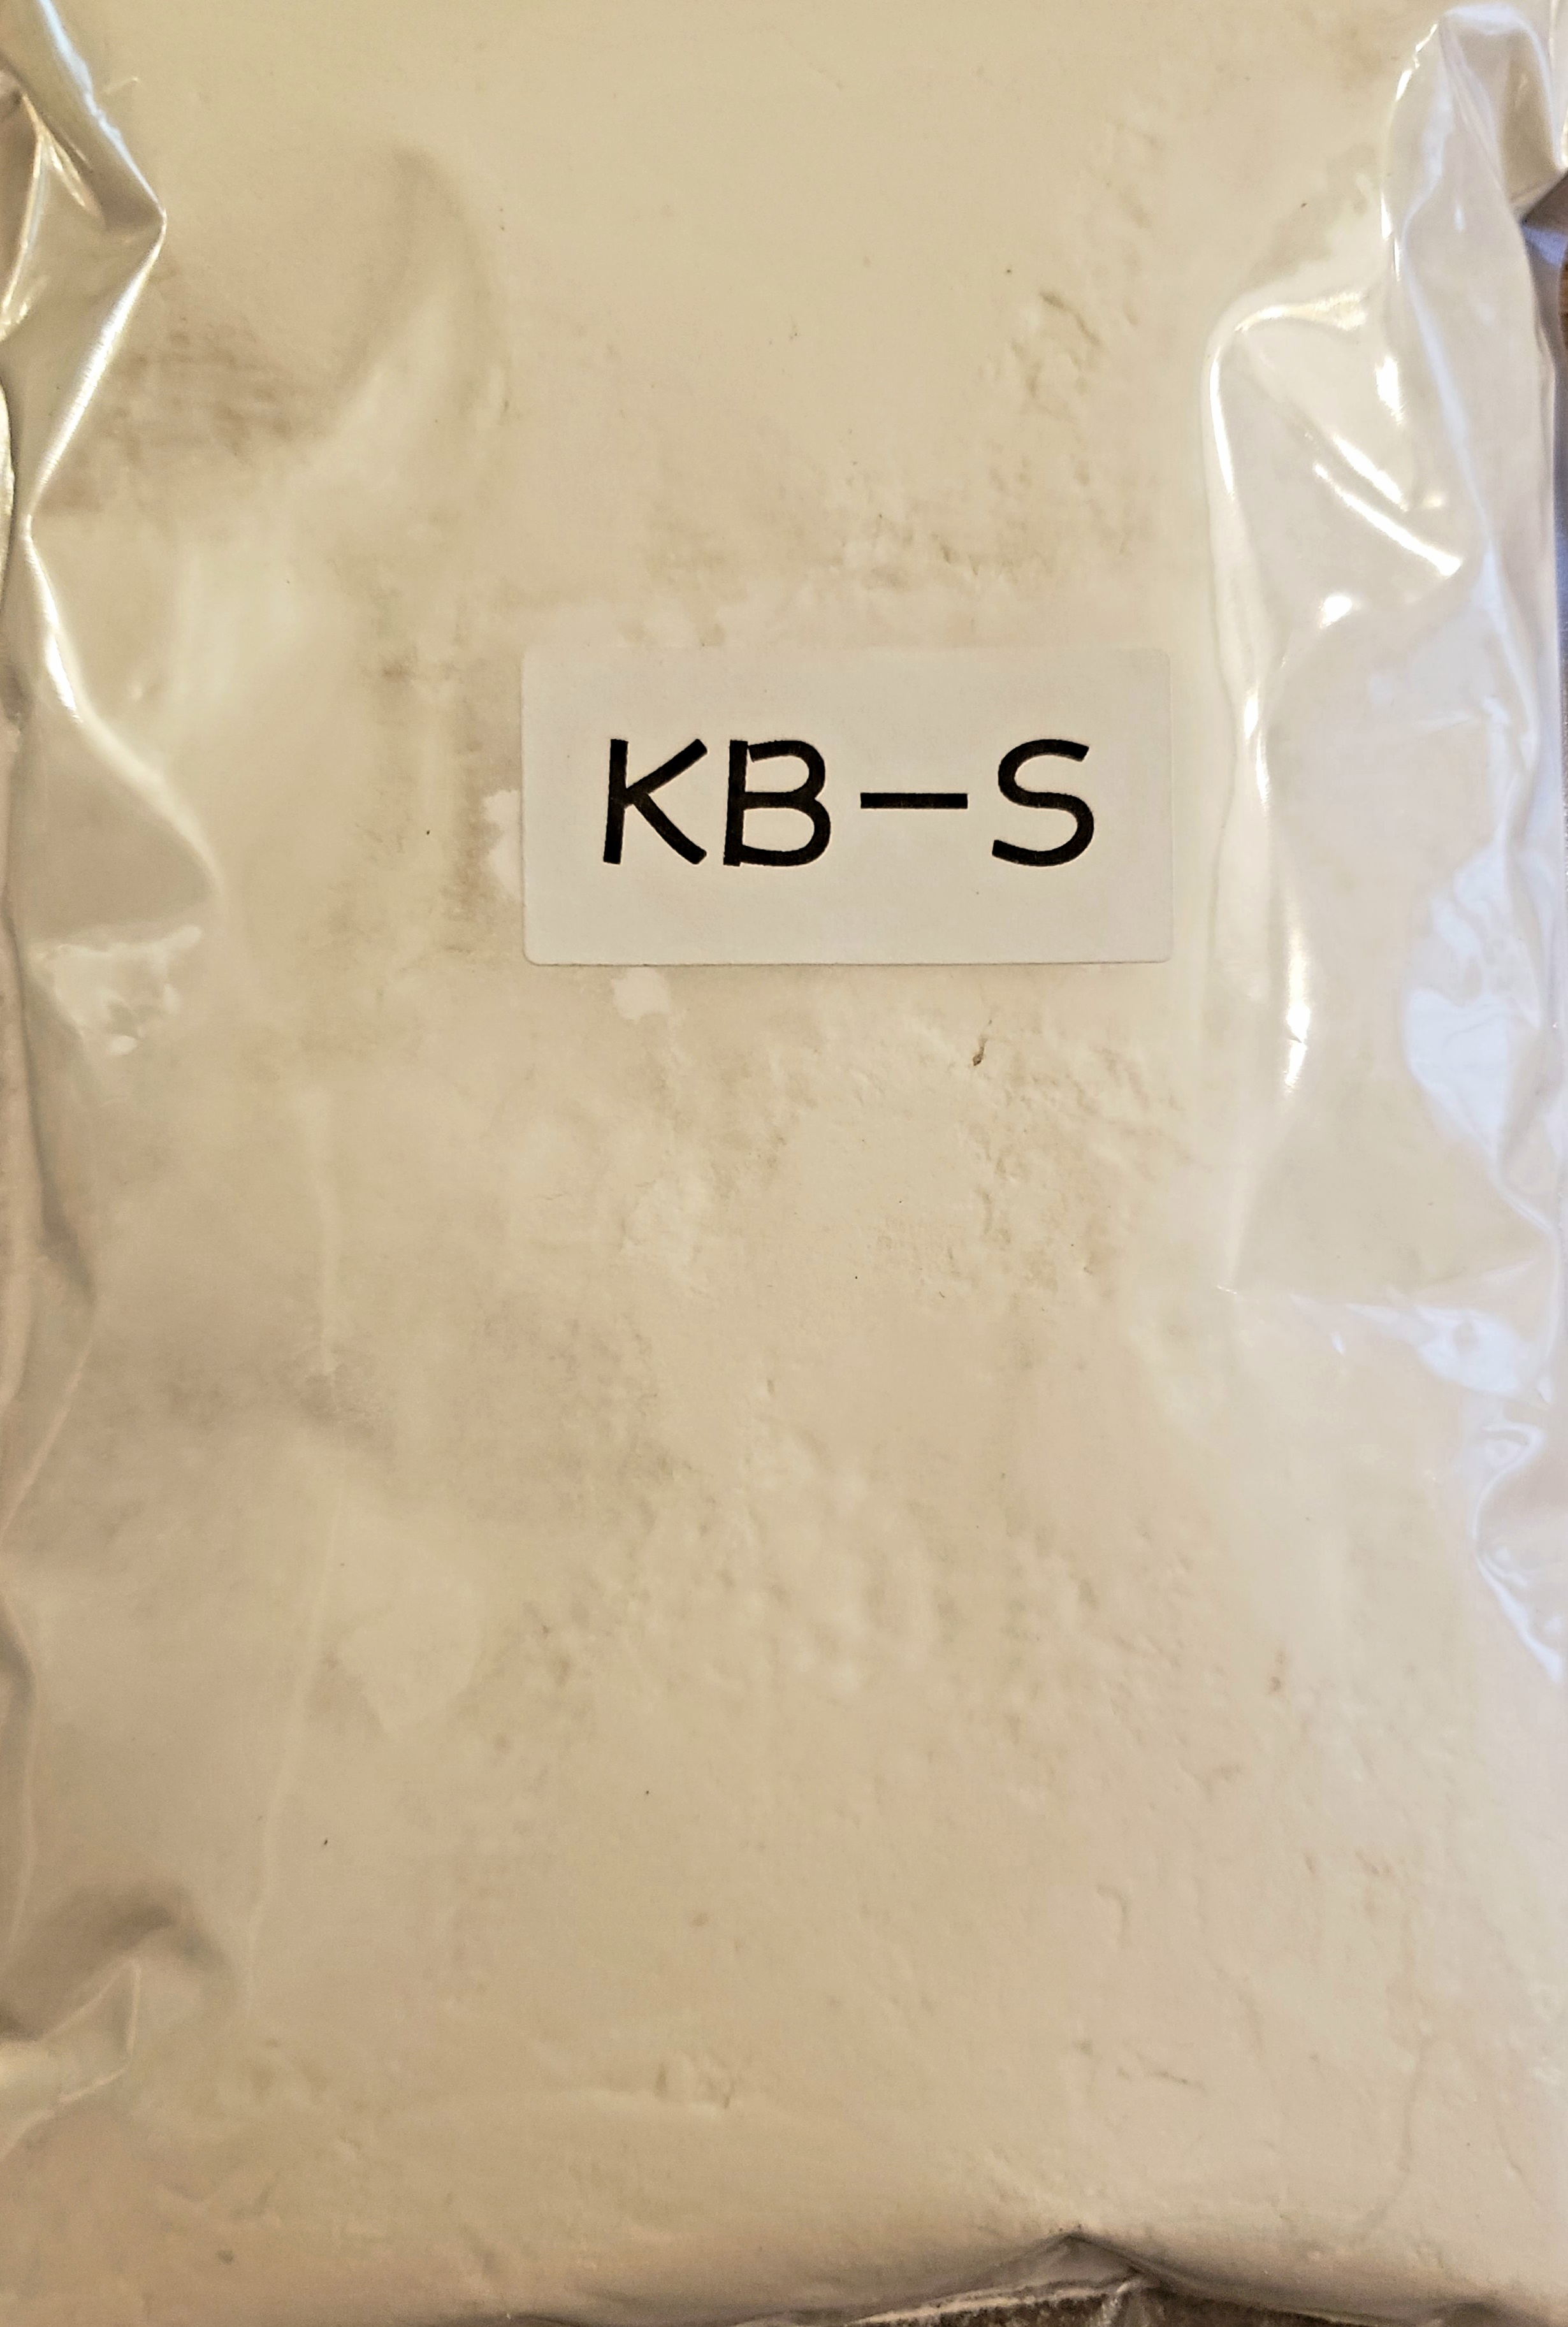 （KBファーム）KB-S（400cc/KBファームオリジナル添加剤）